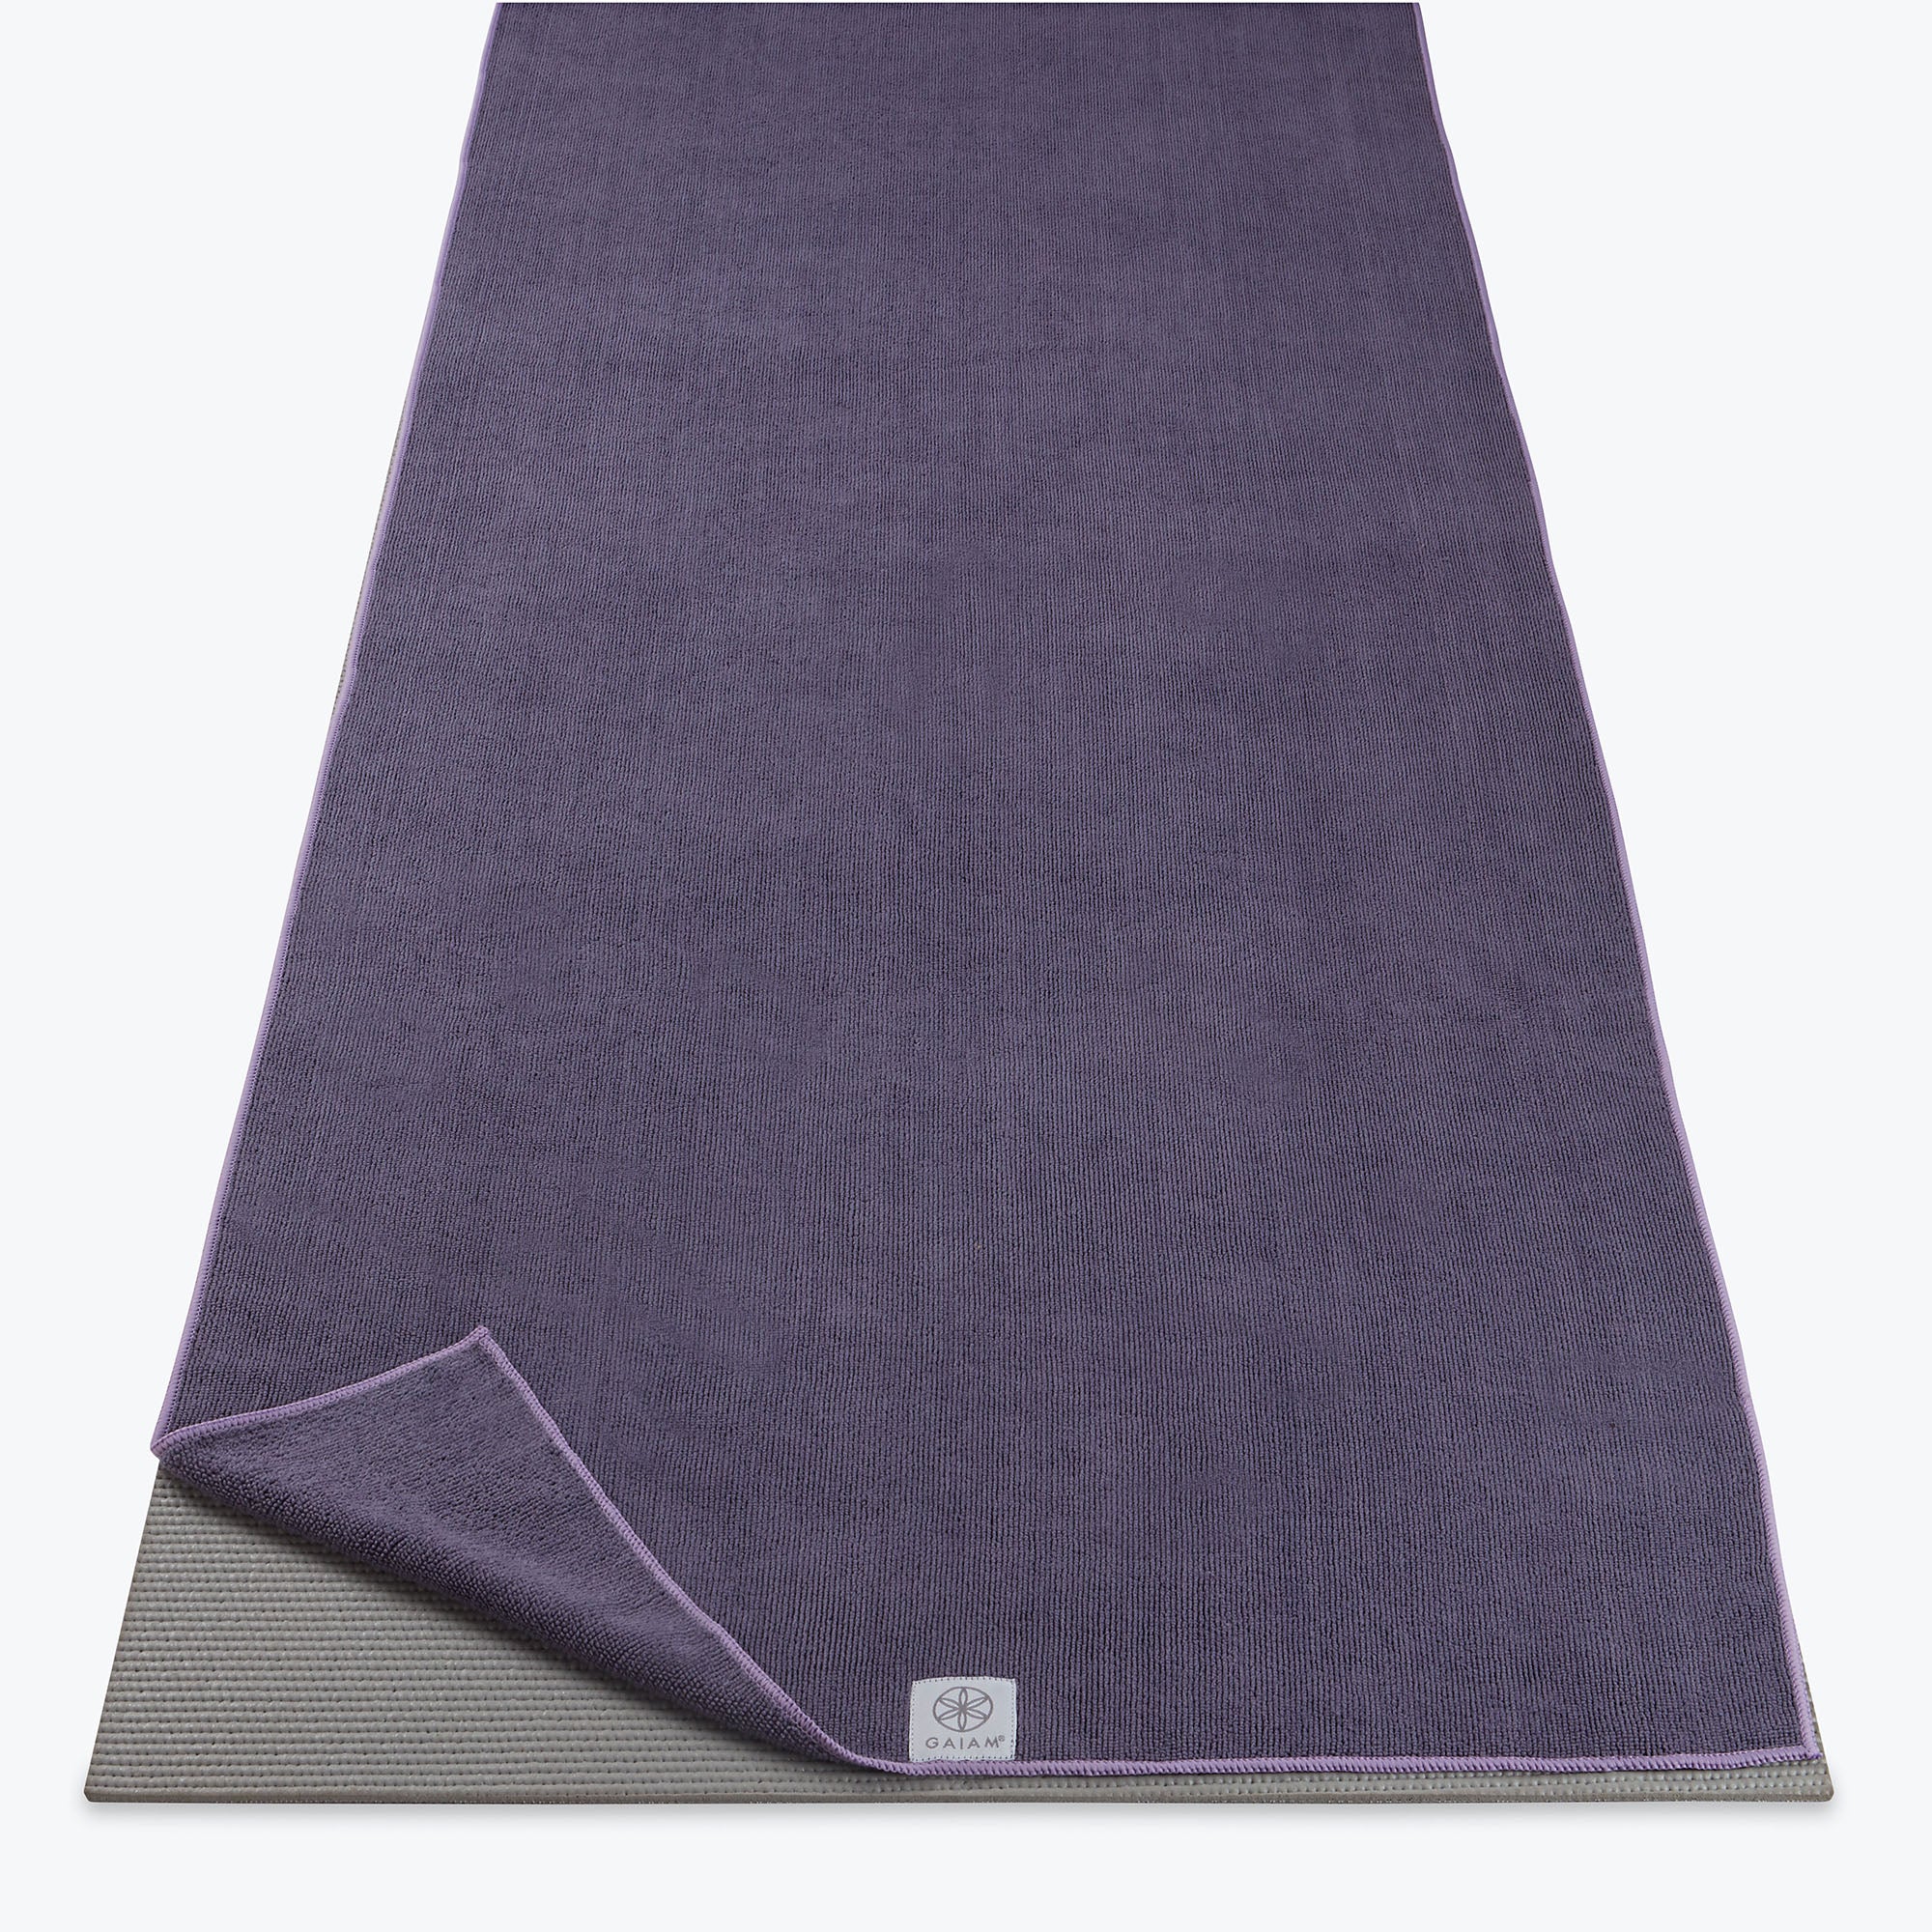  Gaiam Yoga Mat Towel - No Slip Mat-Sized Hot Yoga Towel, Microfiber Moisture Wicking Top & Sticky Rubber Backing